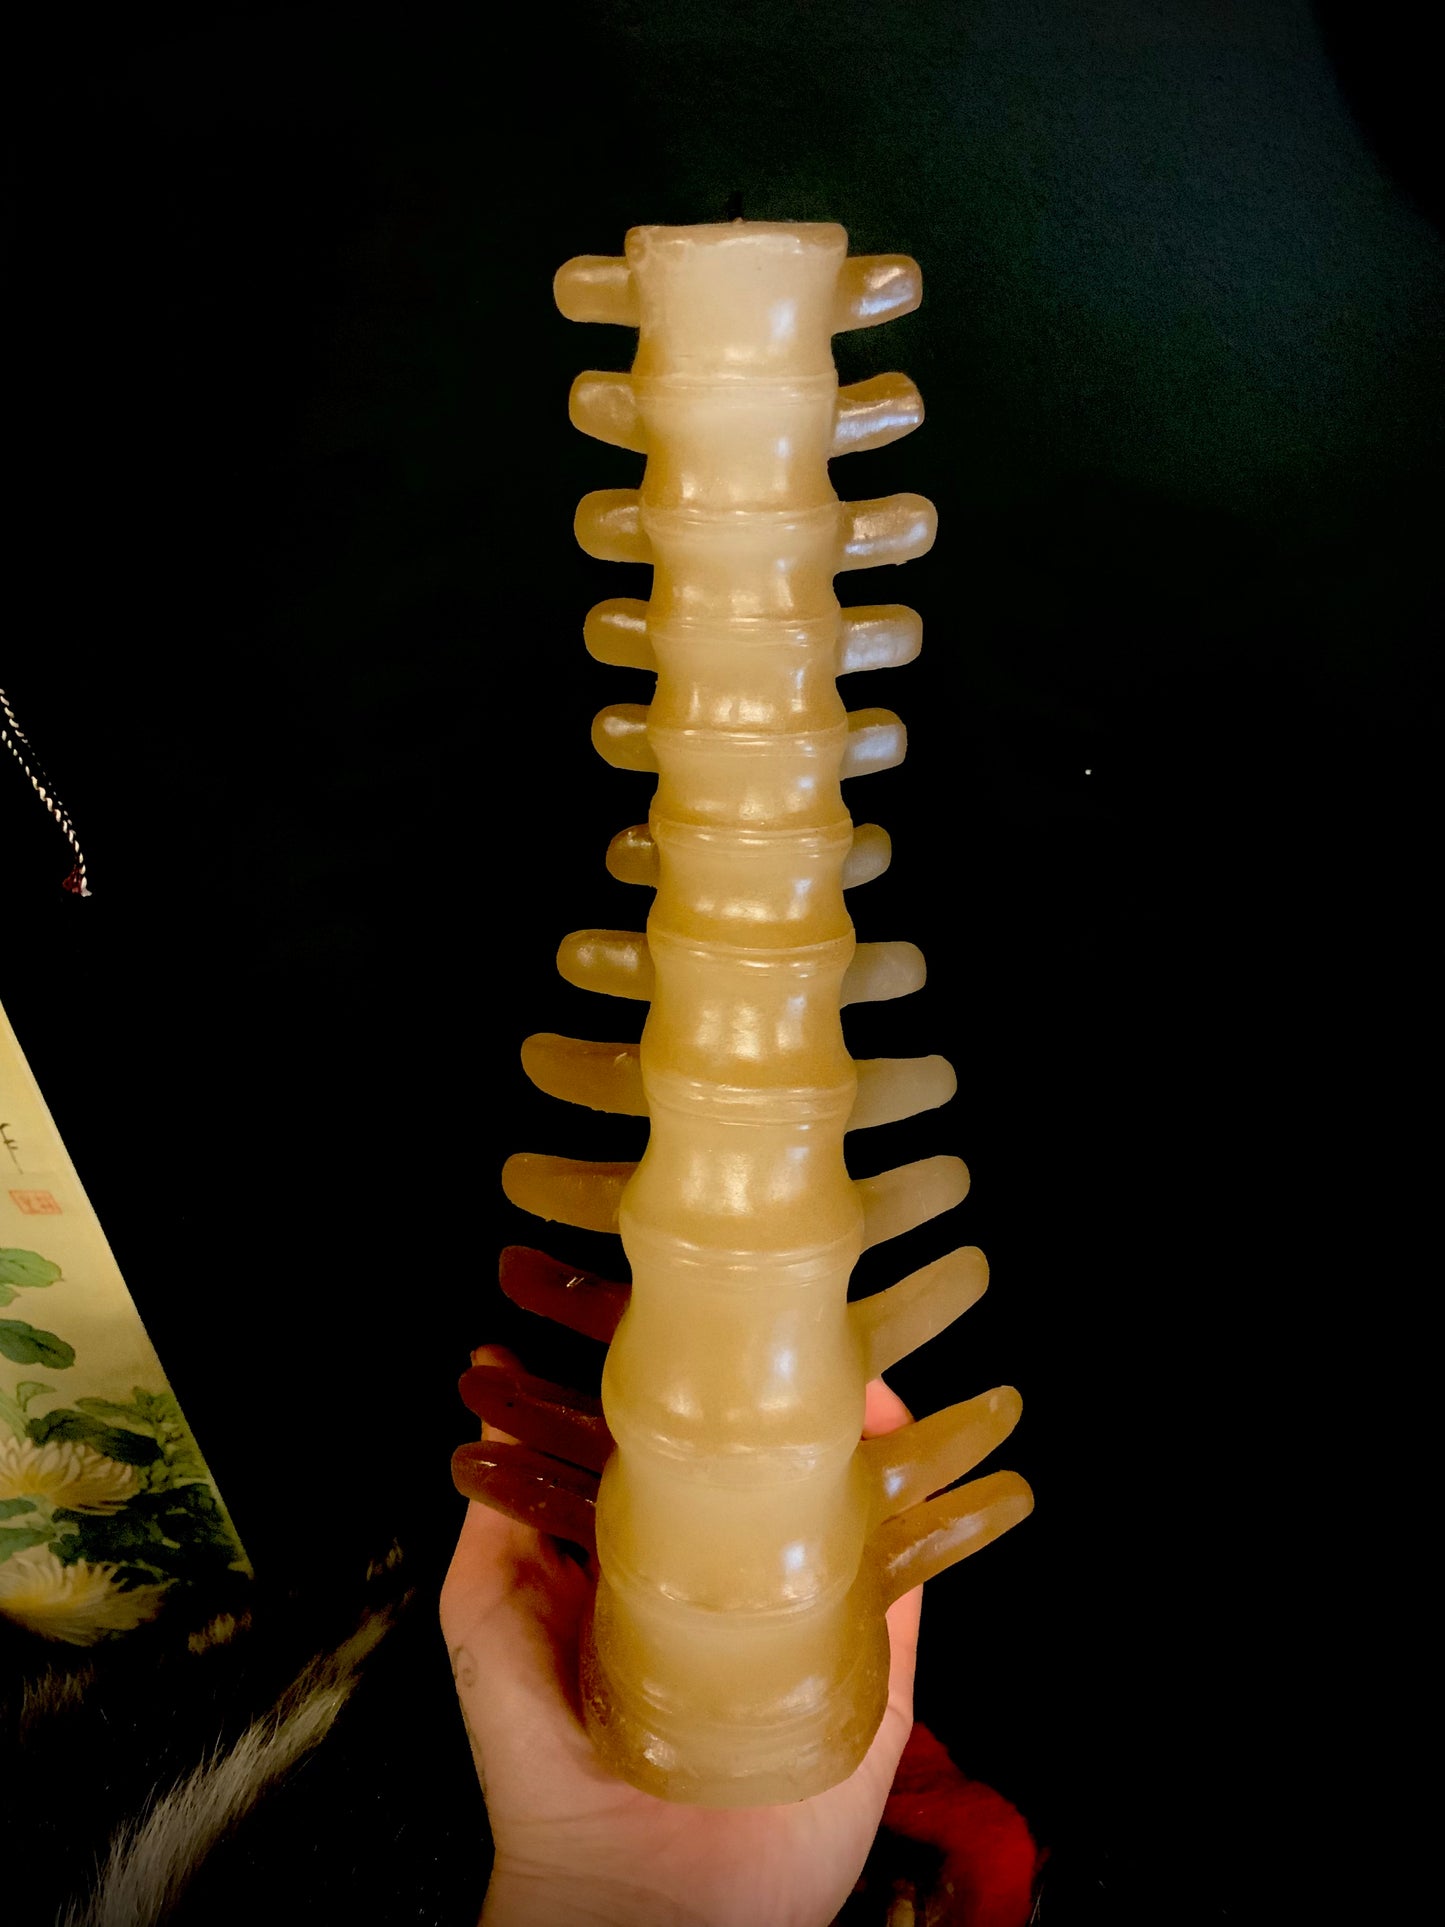 Human spine / vertebra candle